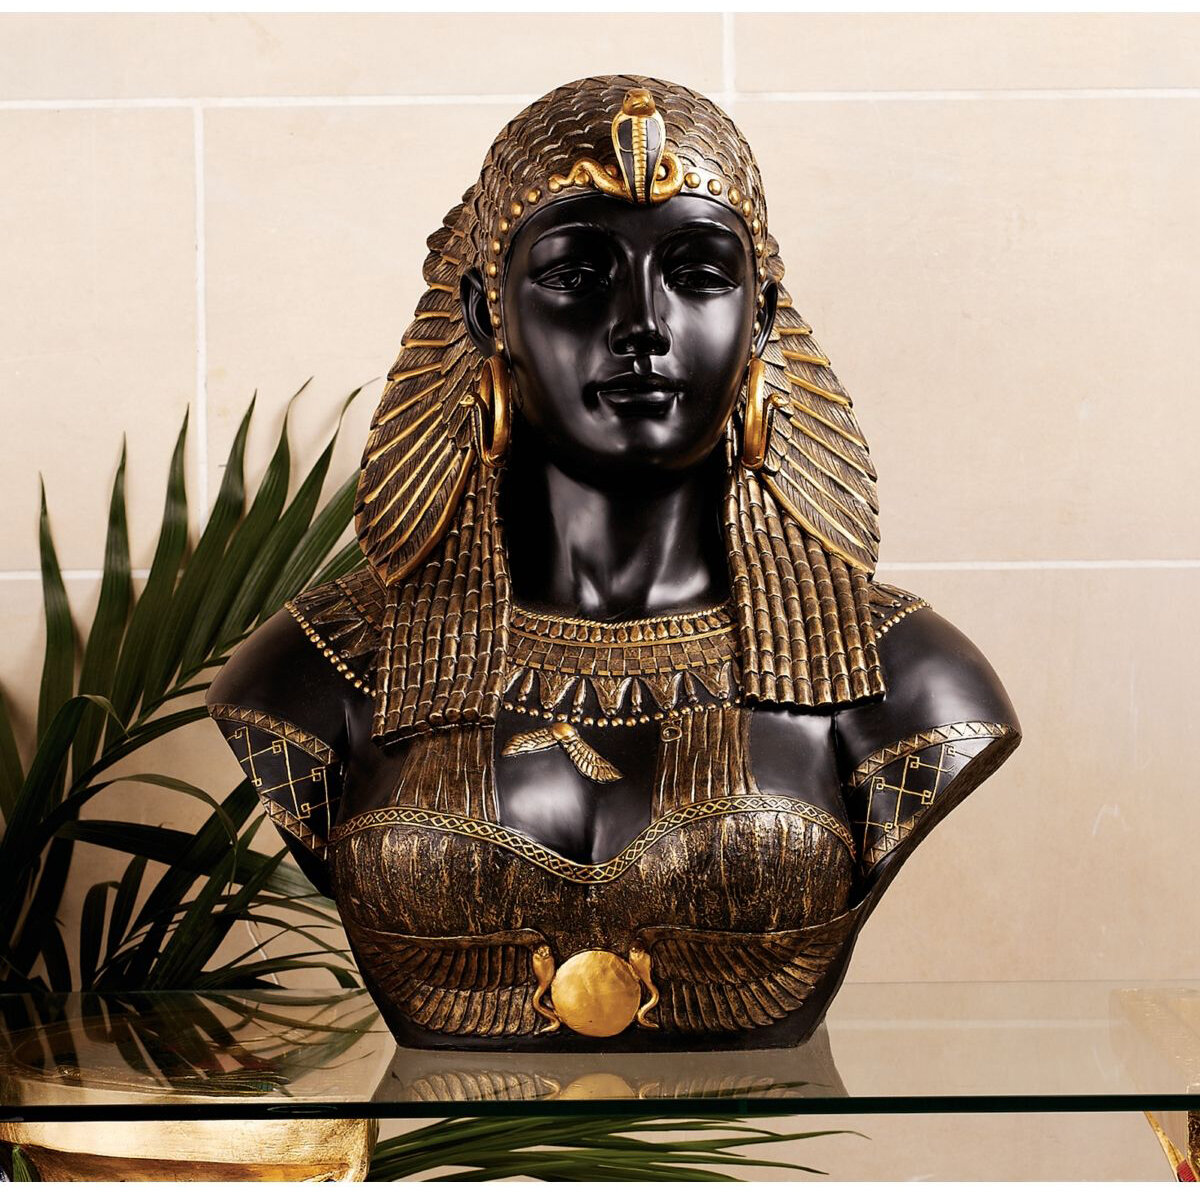 cleopatra statue